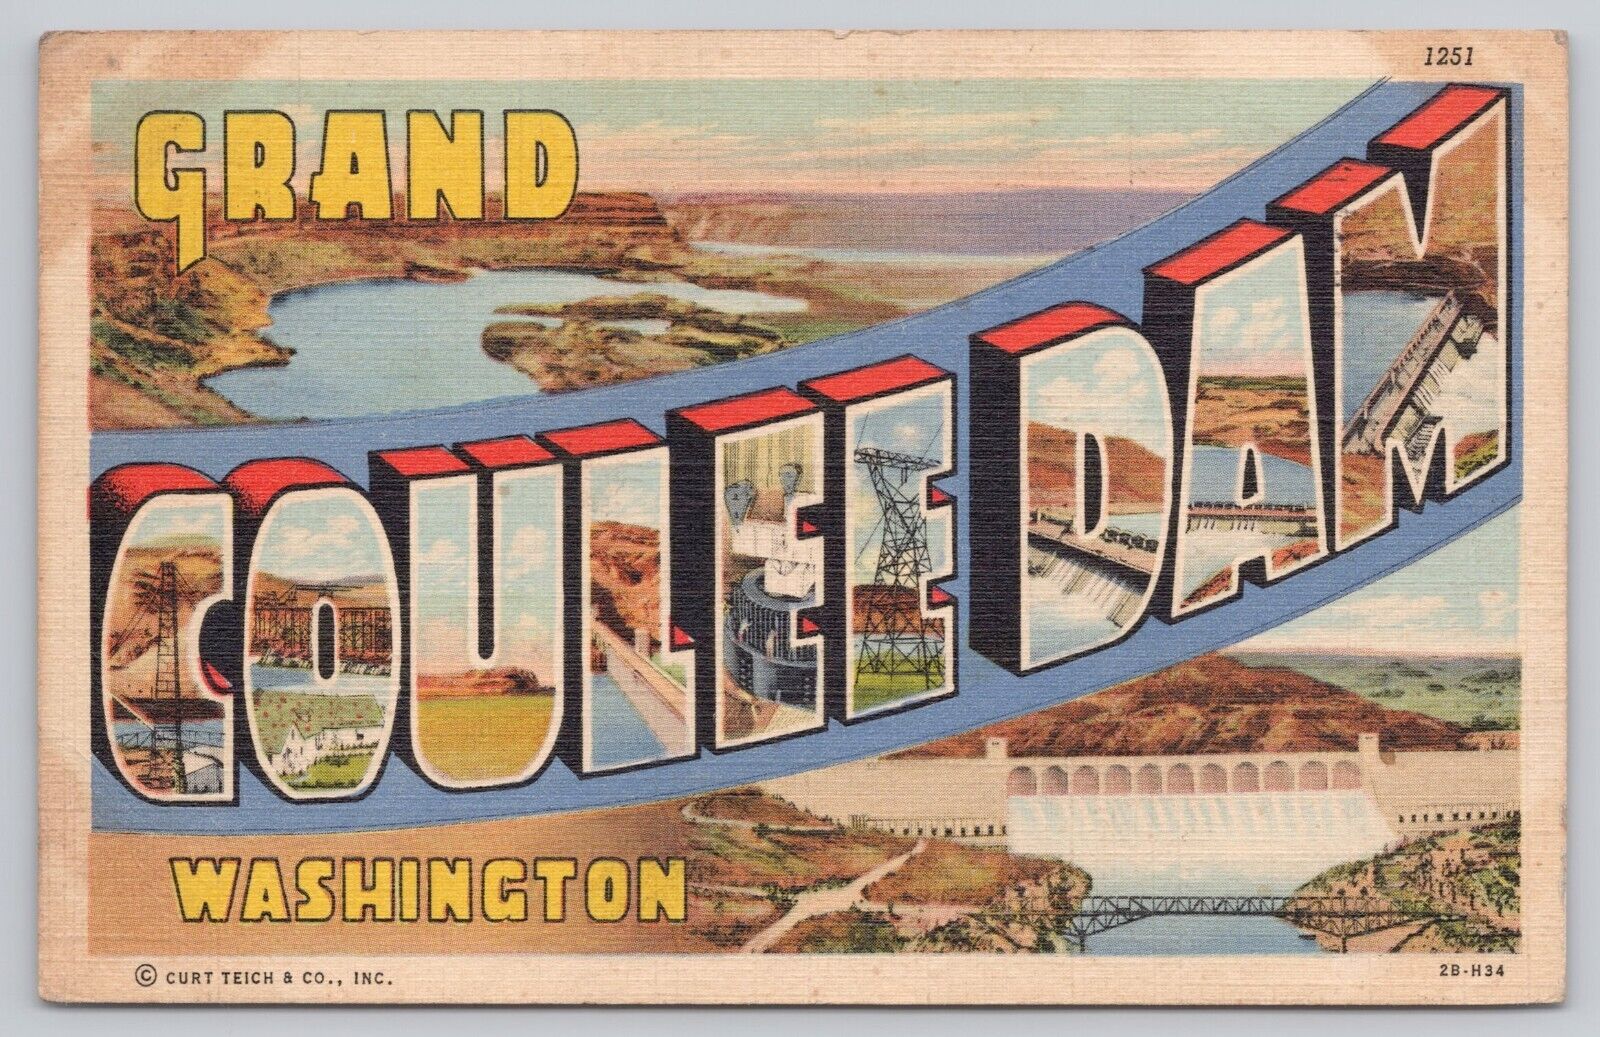 Grand Coulee Dam Washington, Large Letter Greetings, Vintage Postcard